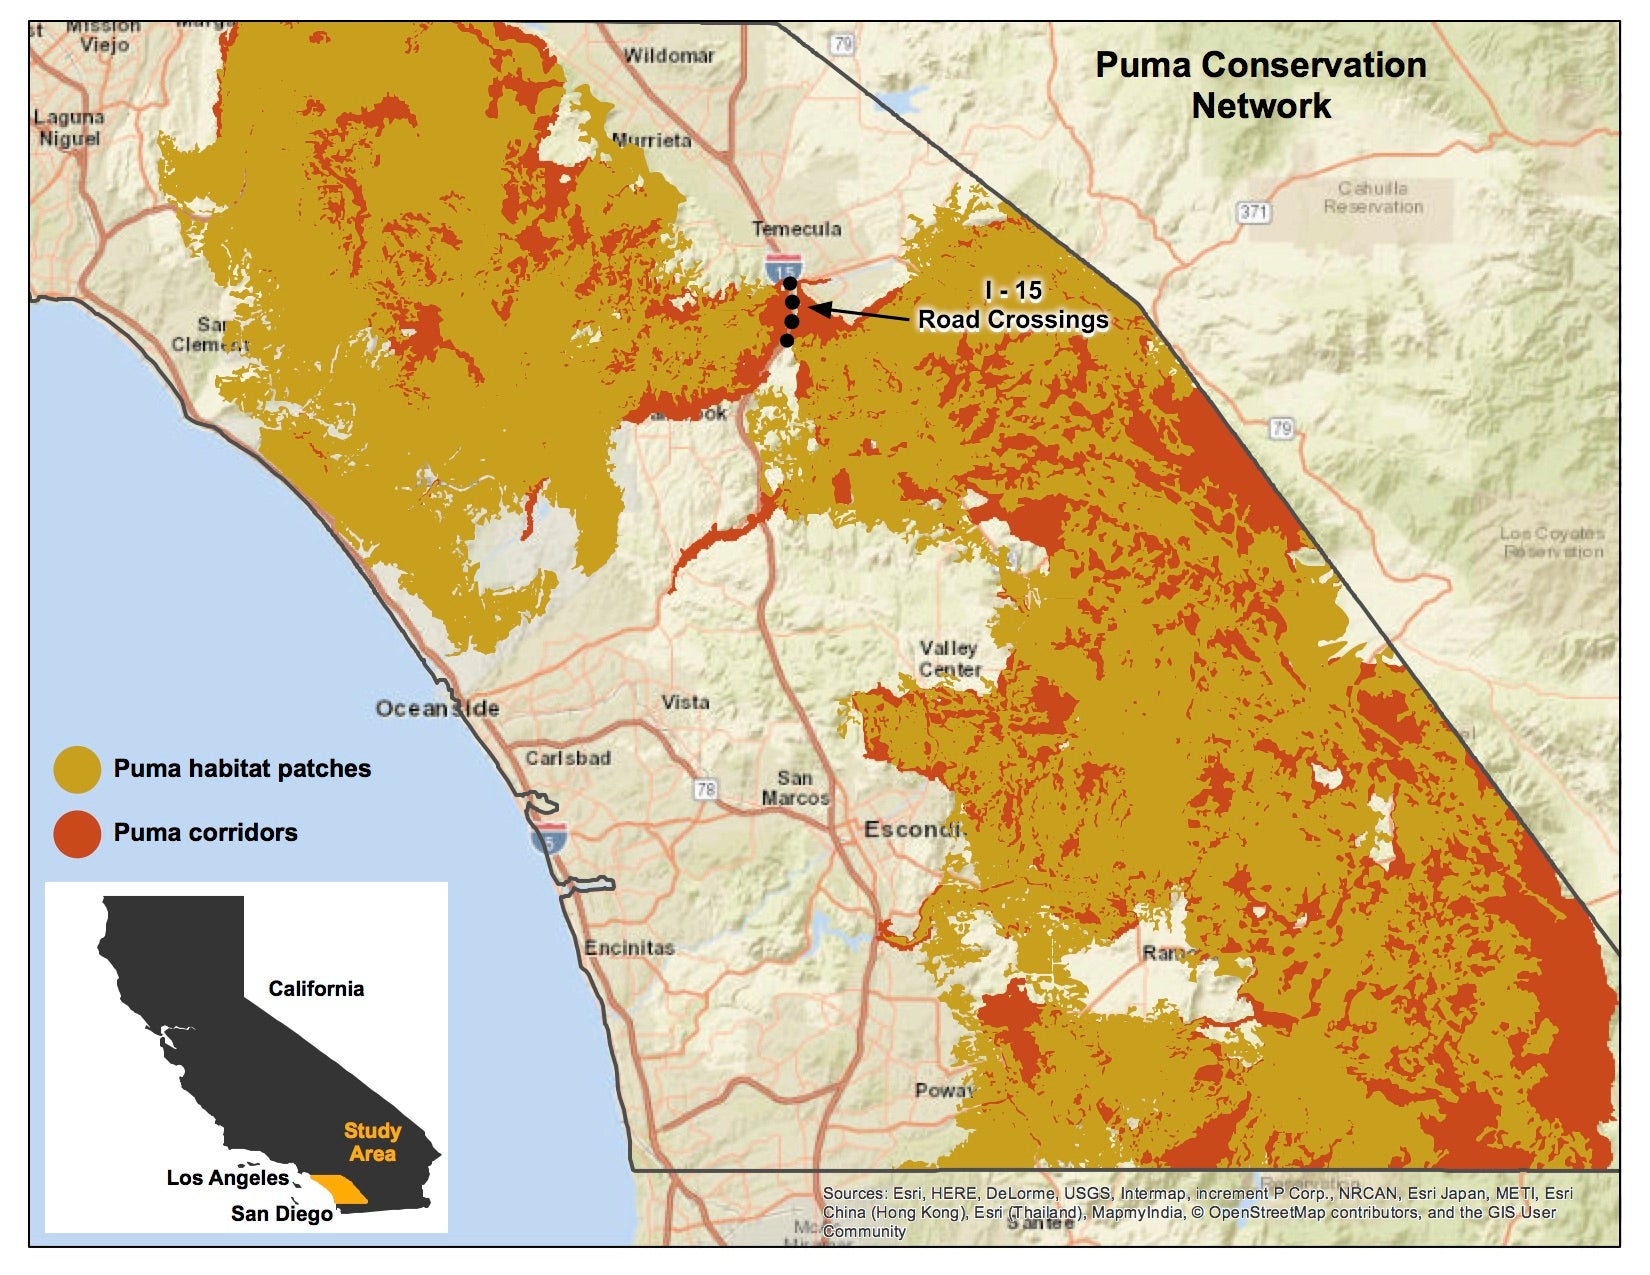 Puma conservation network